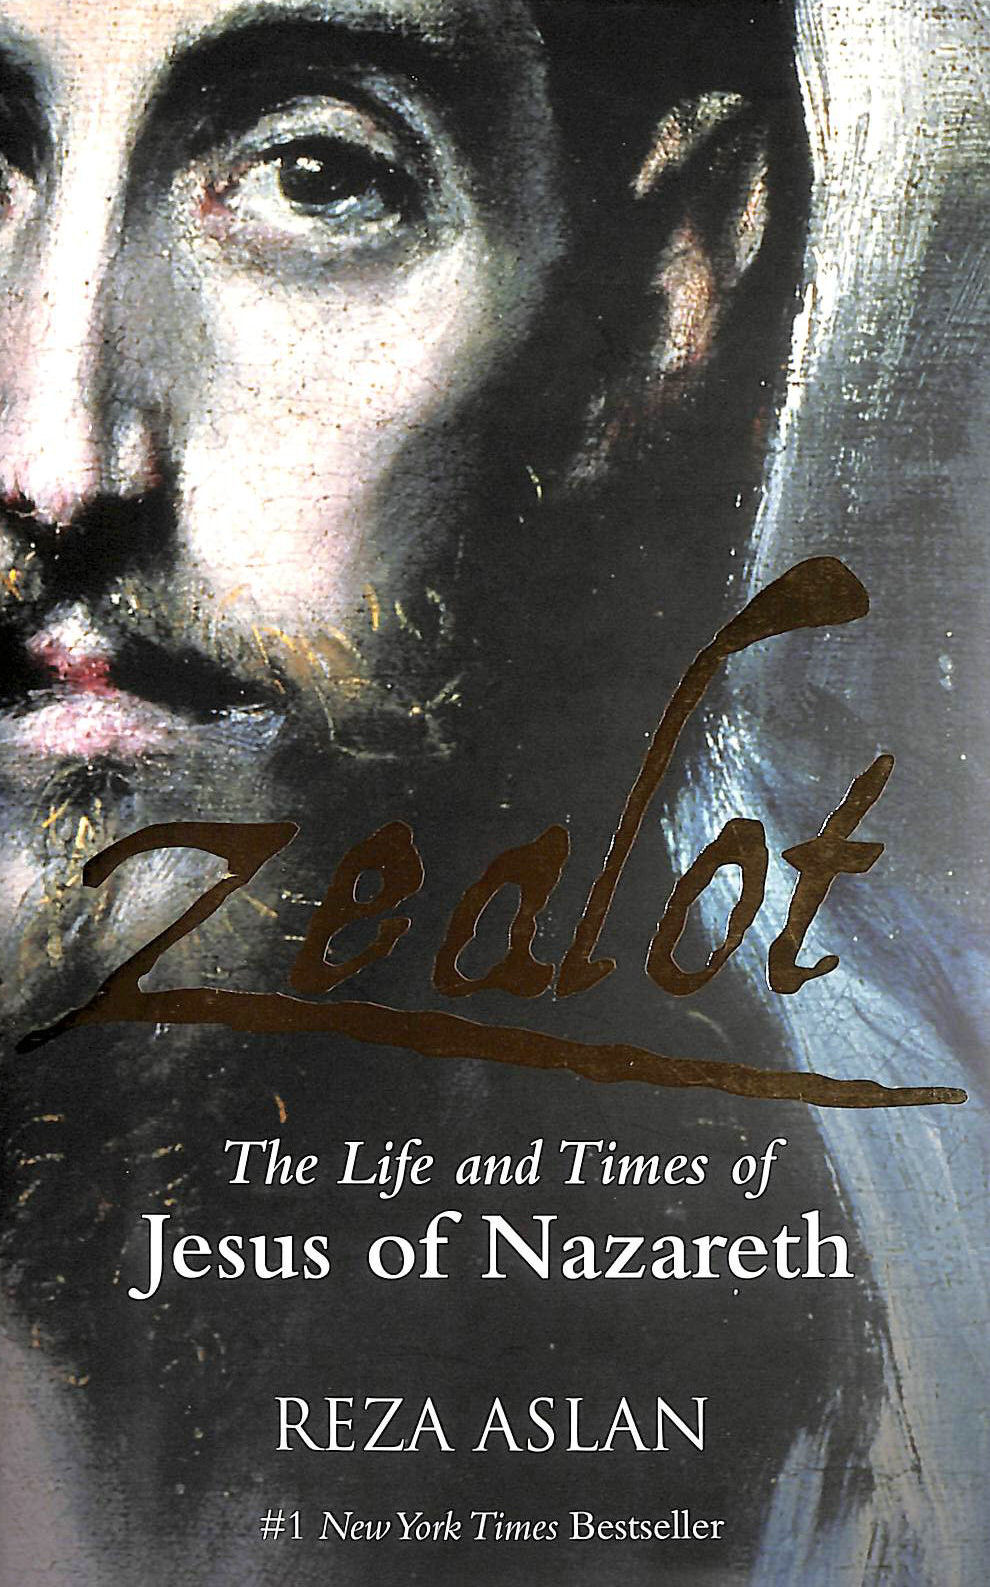 REZA ASLAN - Zealot: The Life and Times of Jesus of Nazareth